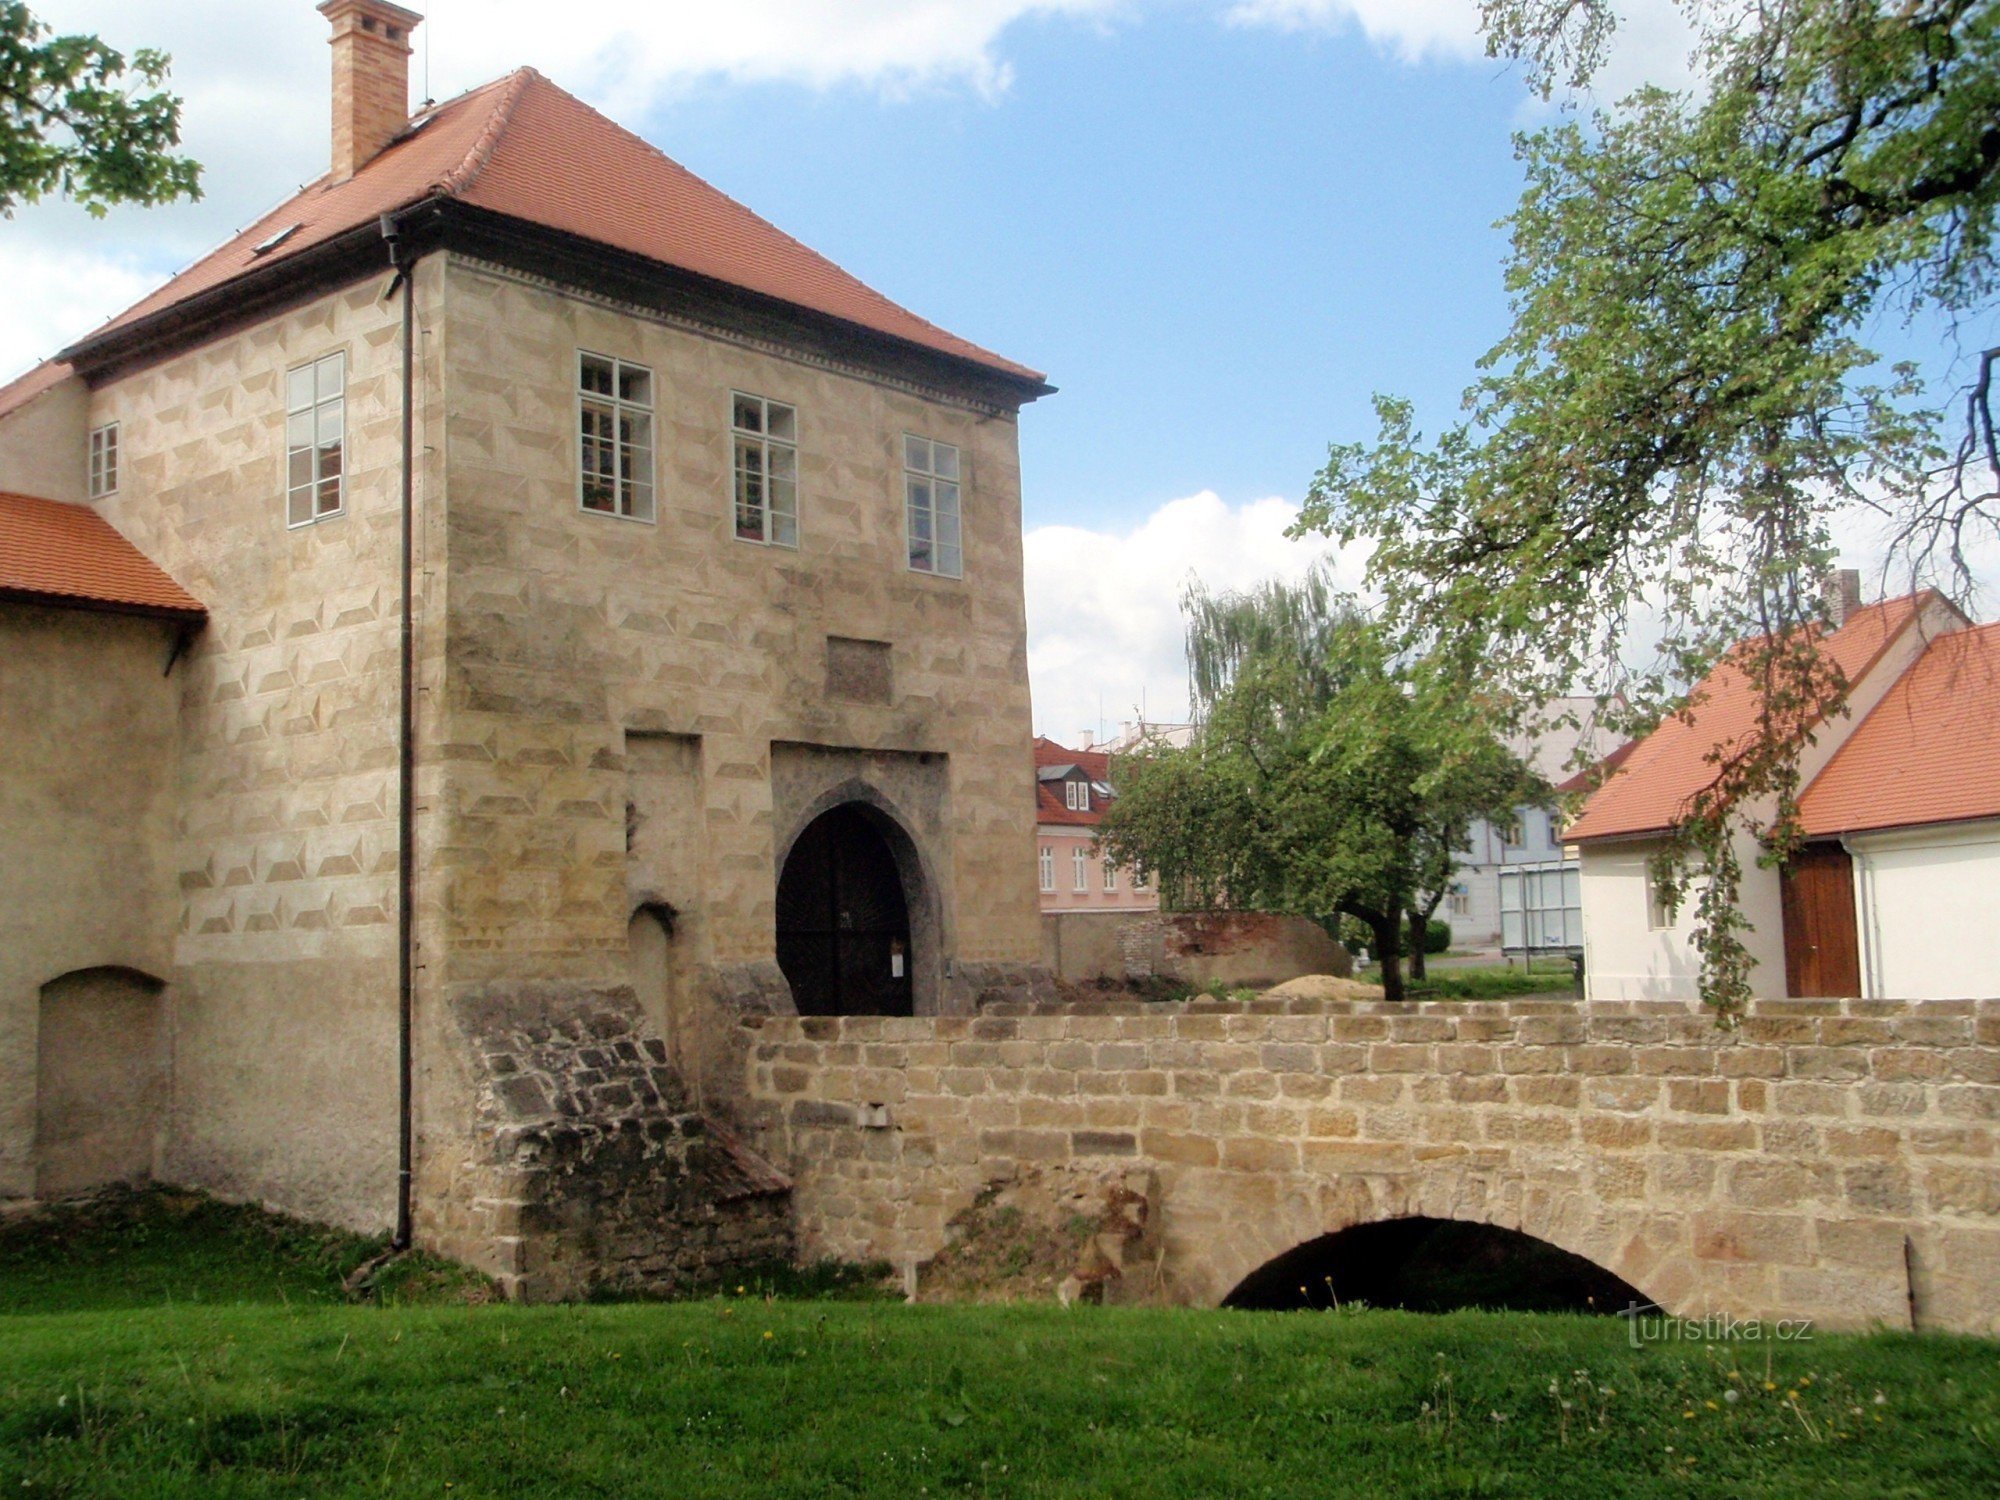 Lipý Castle - entrance gate